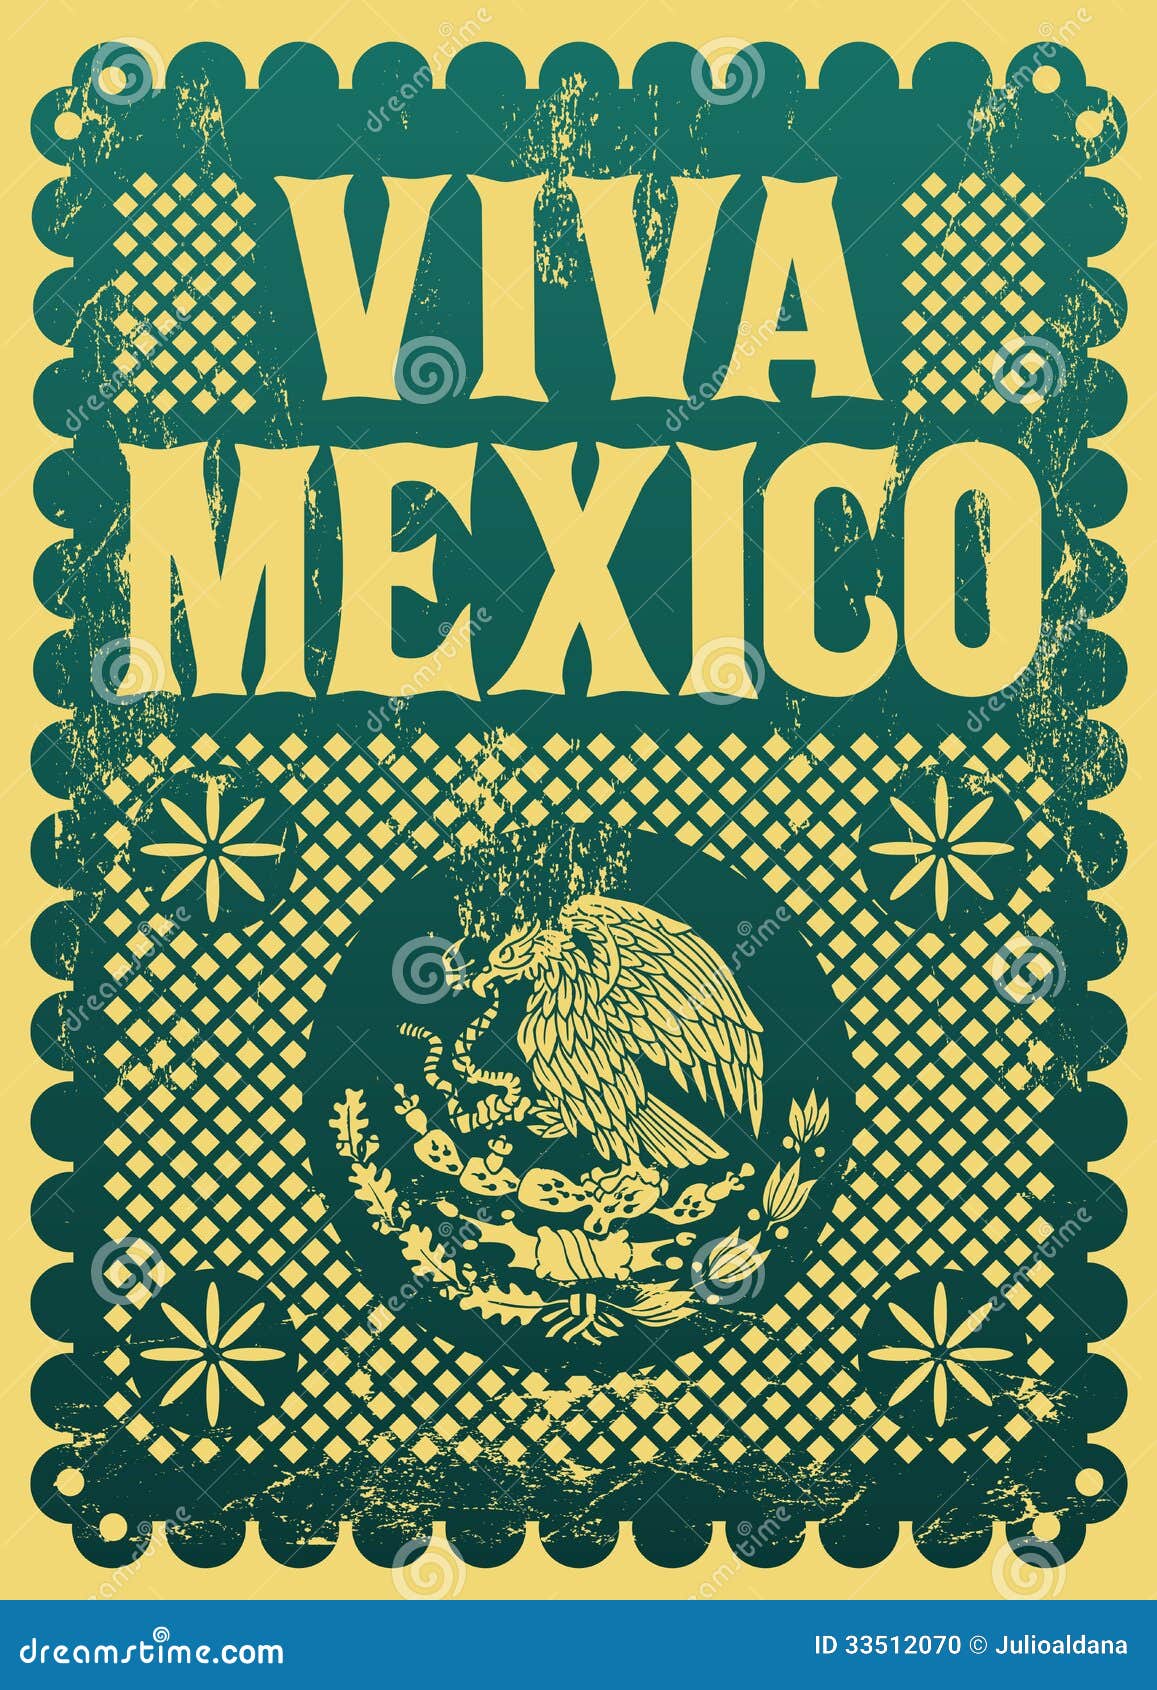 vintage viva mexico - mexican holiday